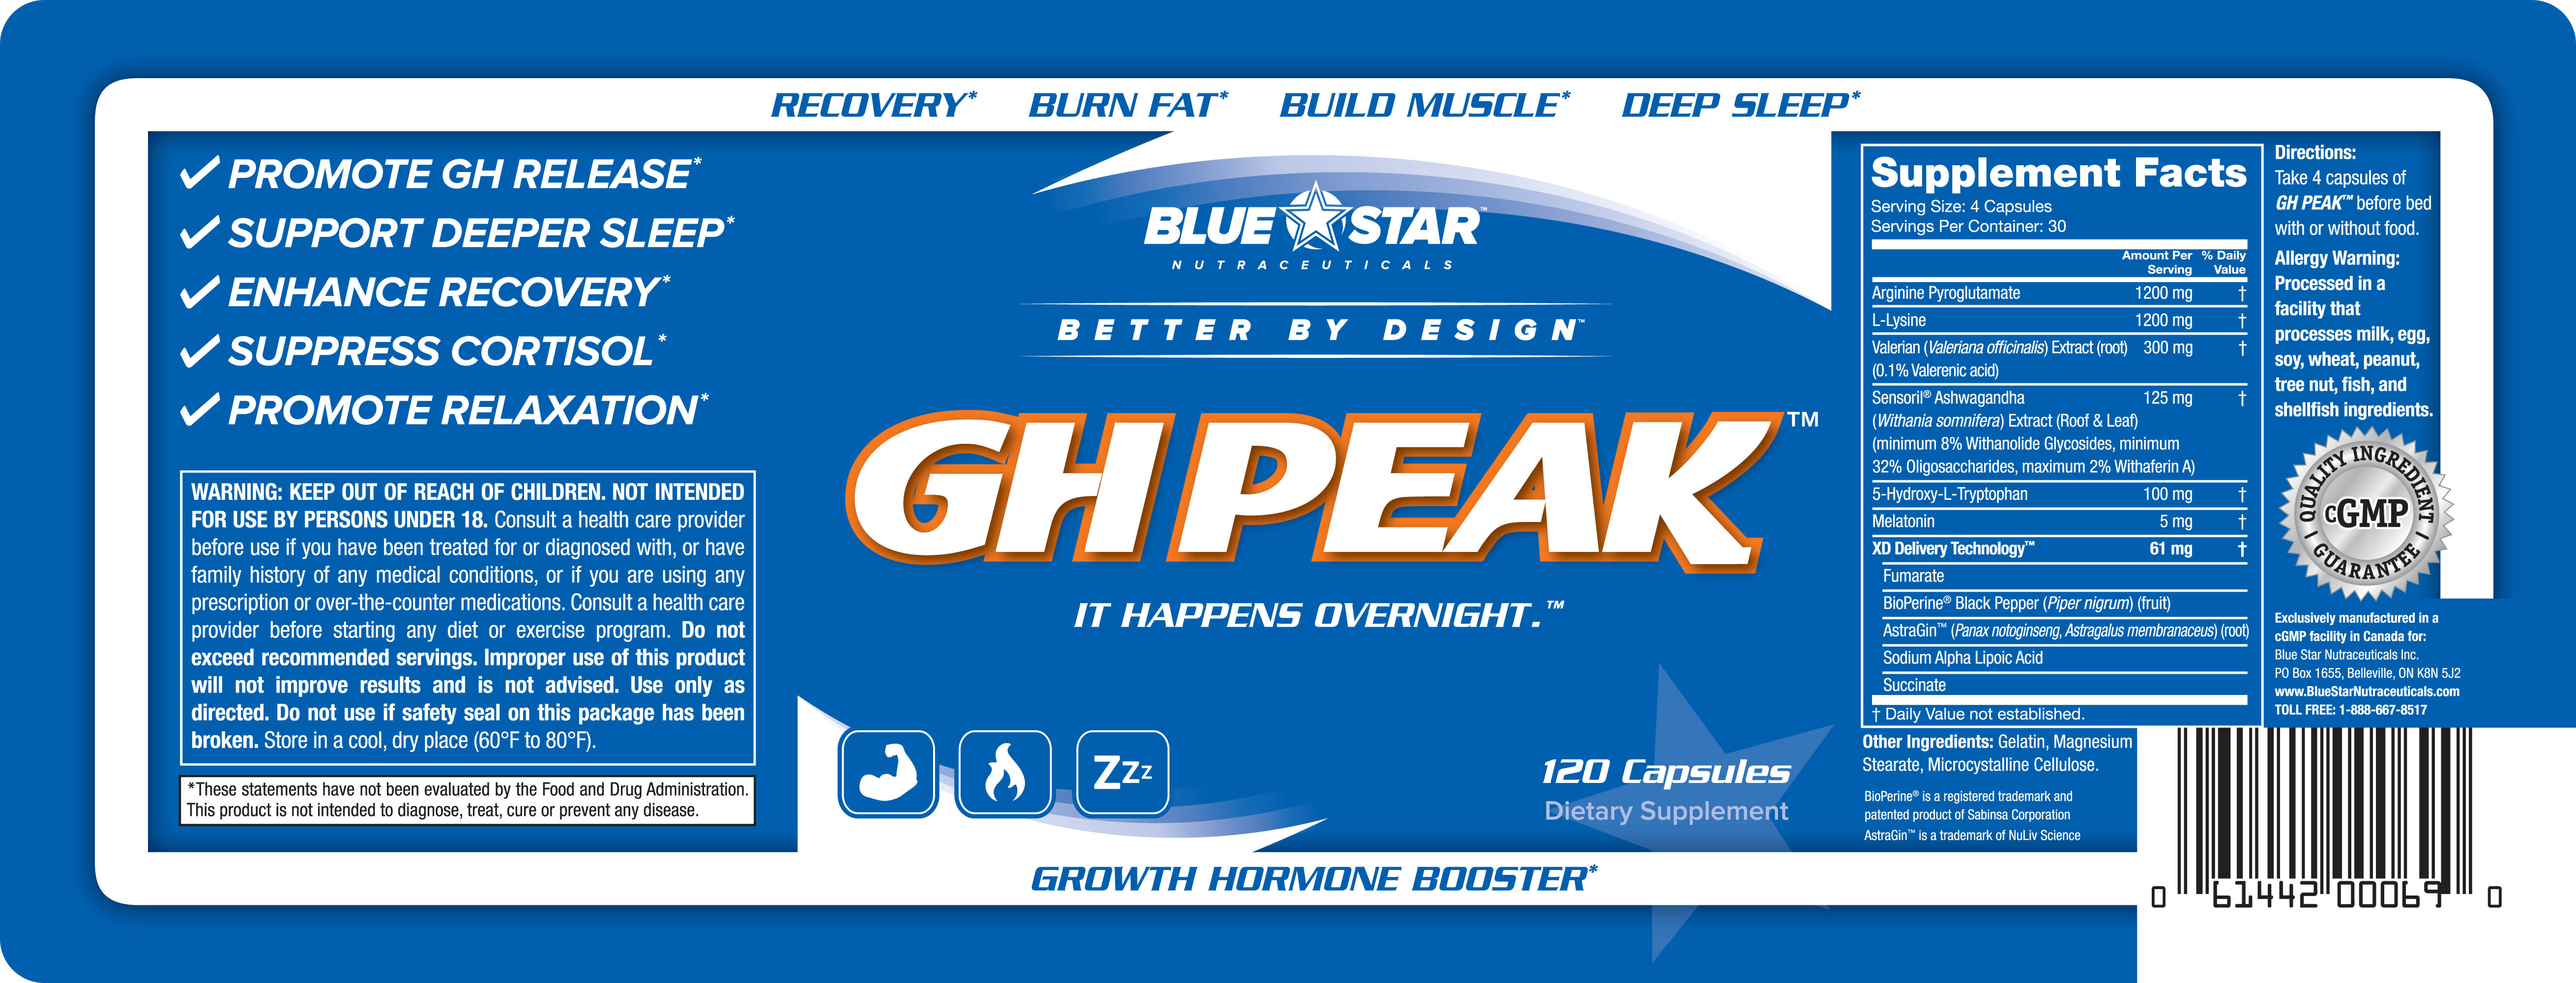 Blue Star Nutraceuticals GH Peak Label